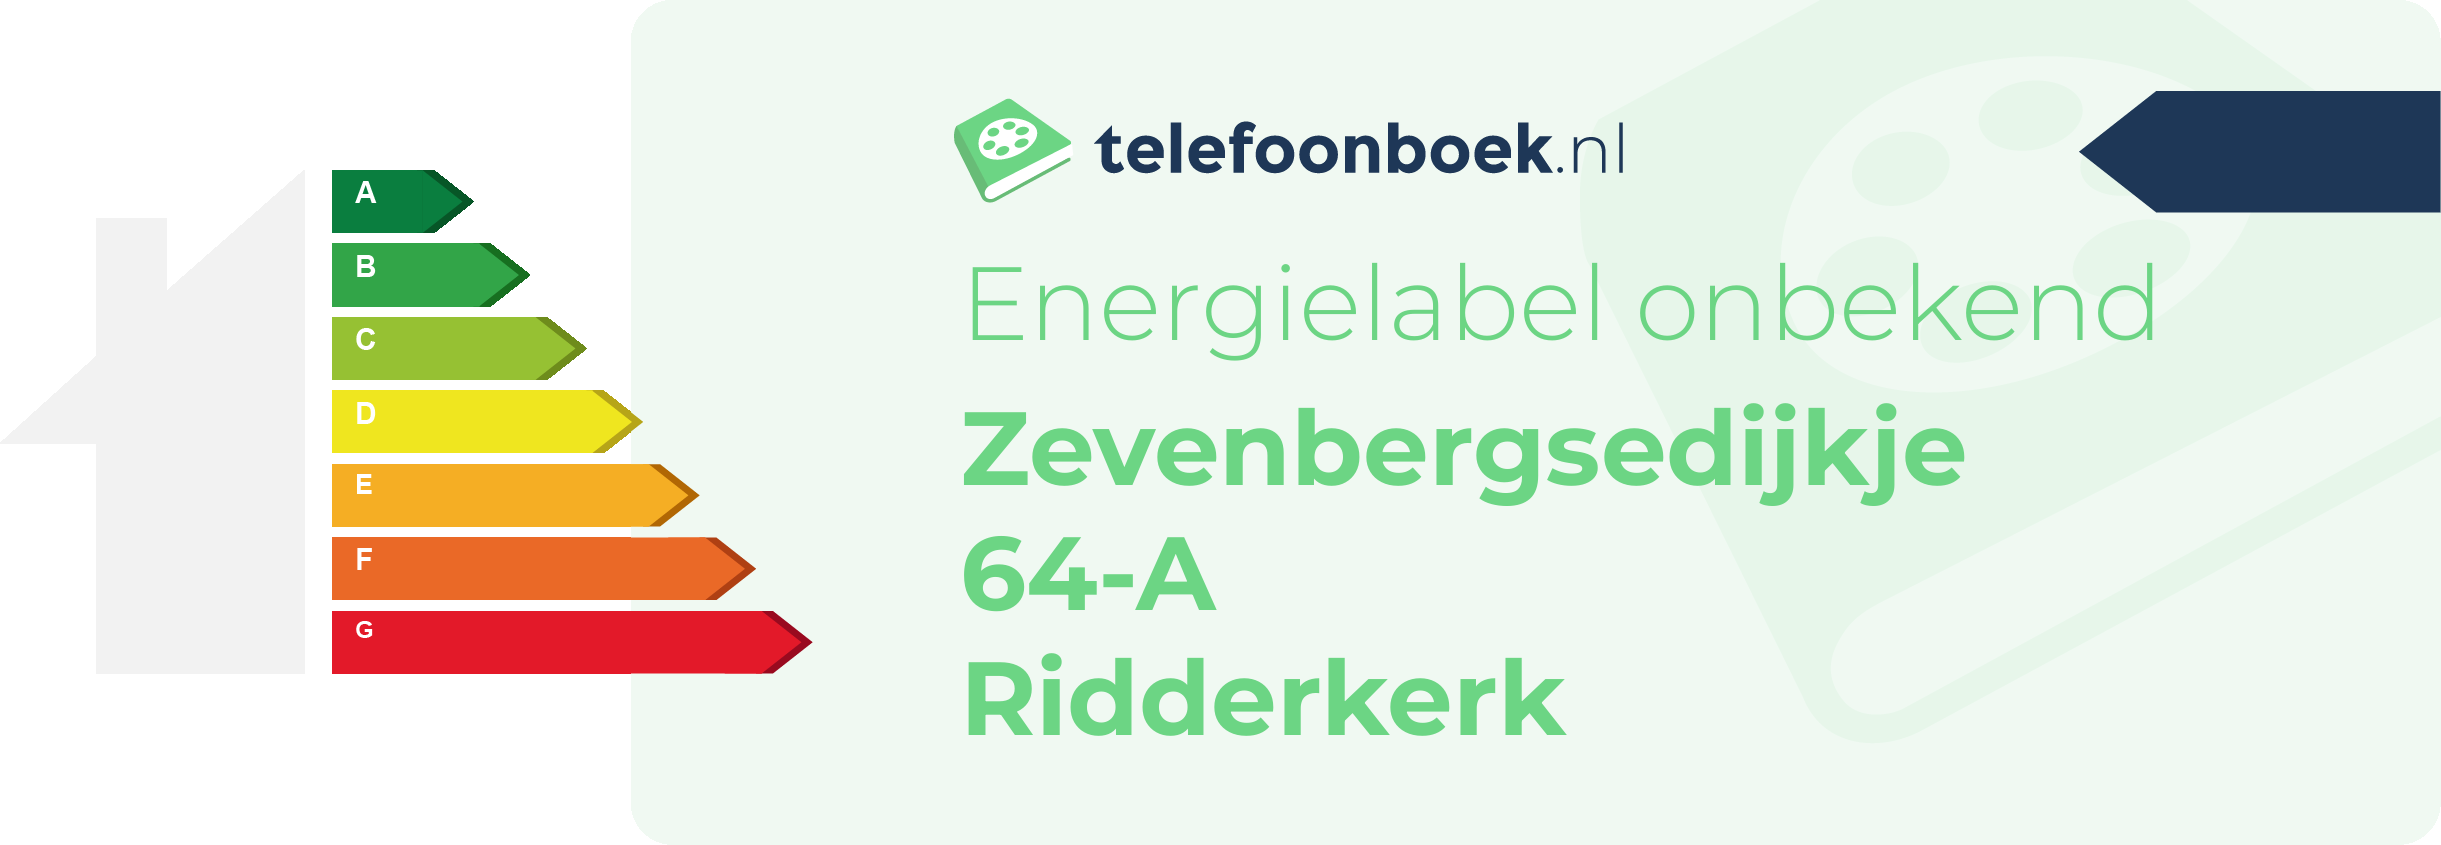 Energielabel Zevenbergsedijkje 64-A Ridderkerk